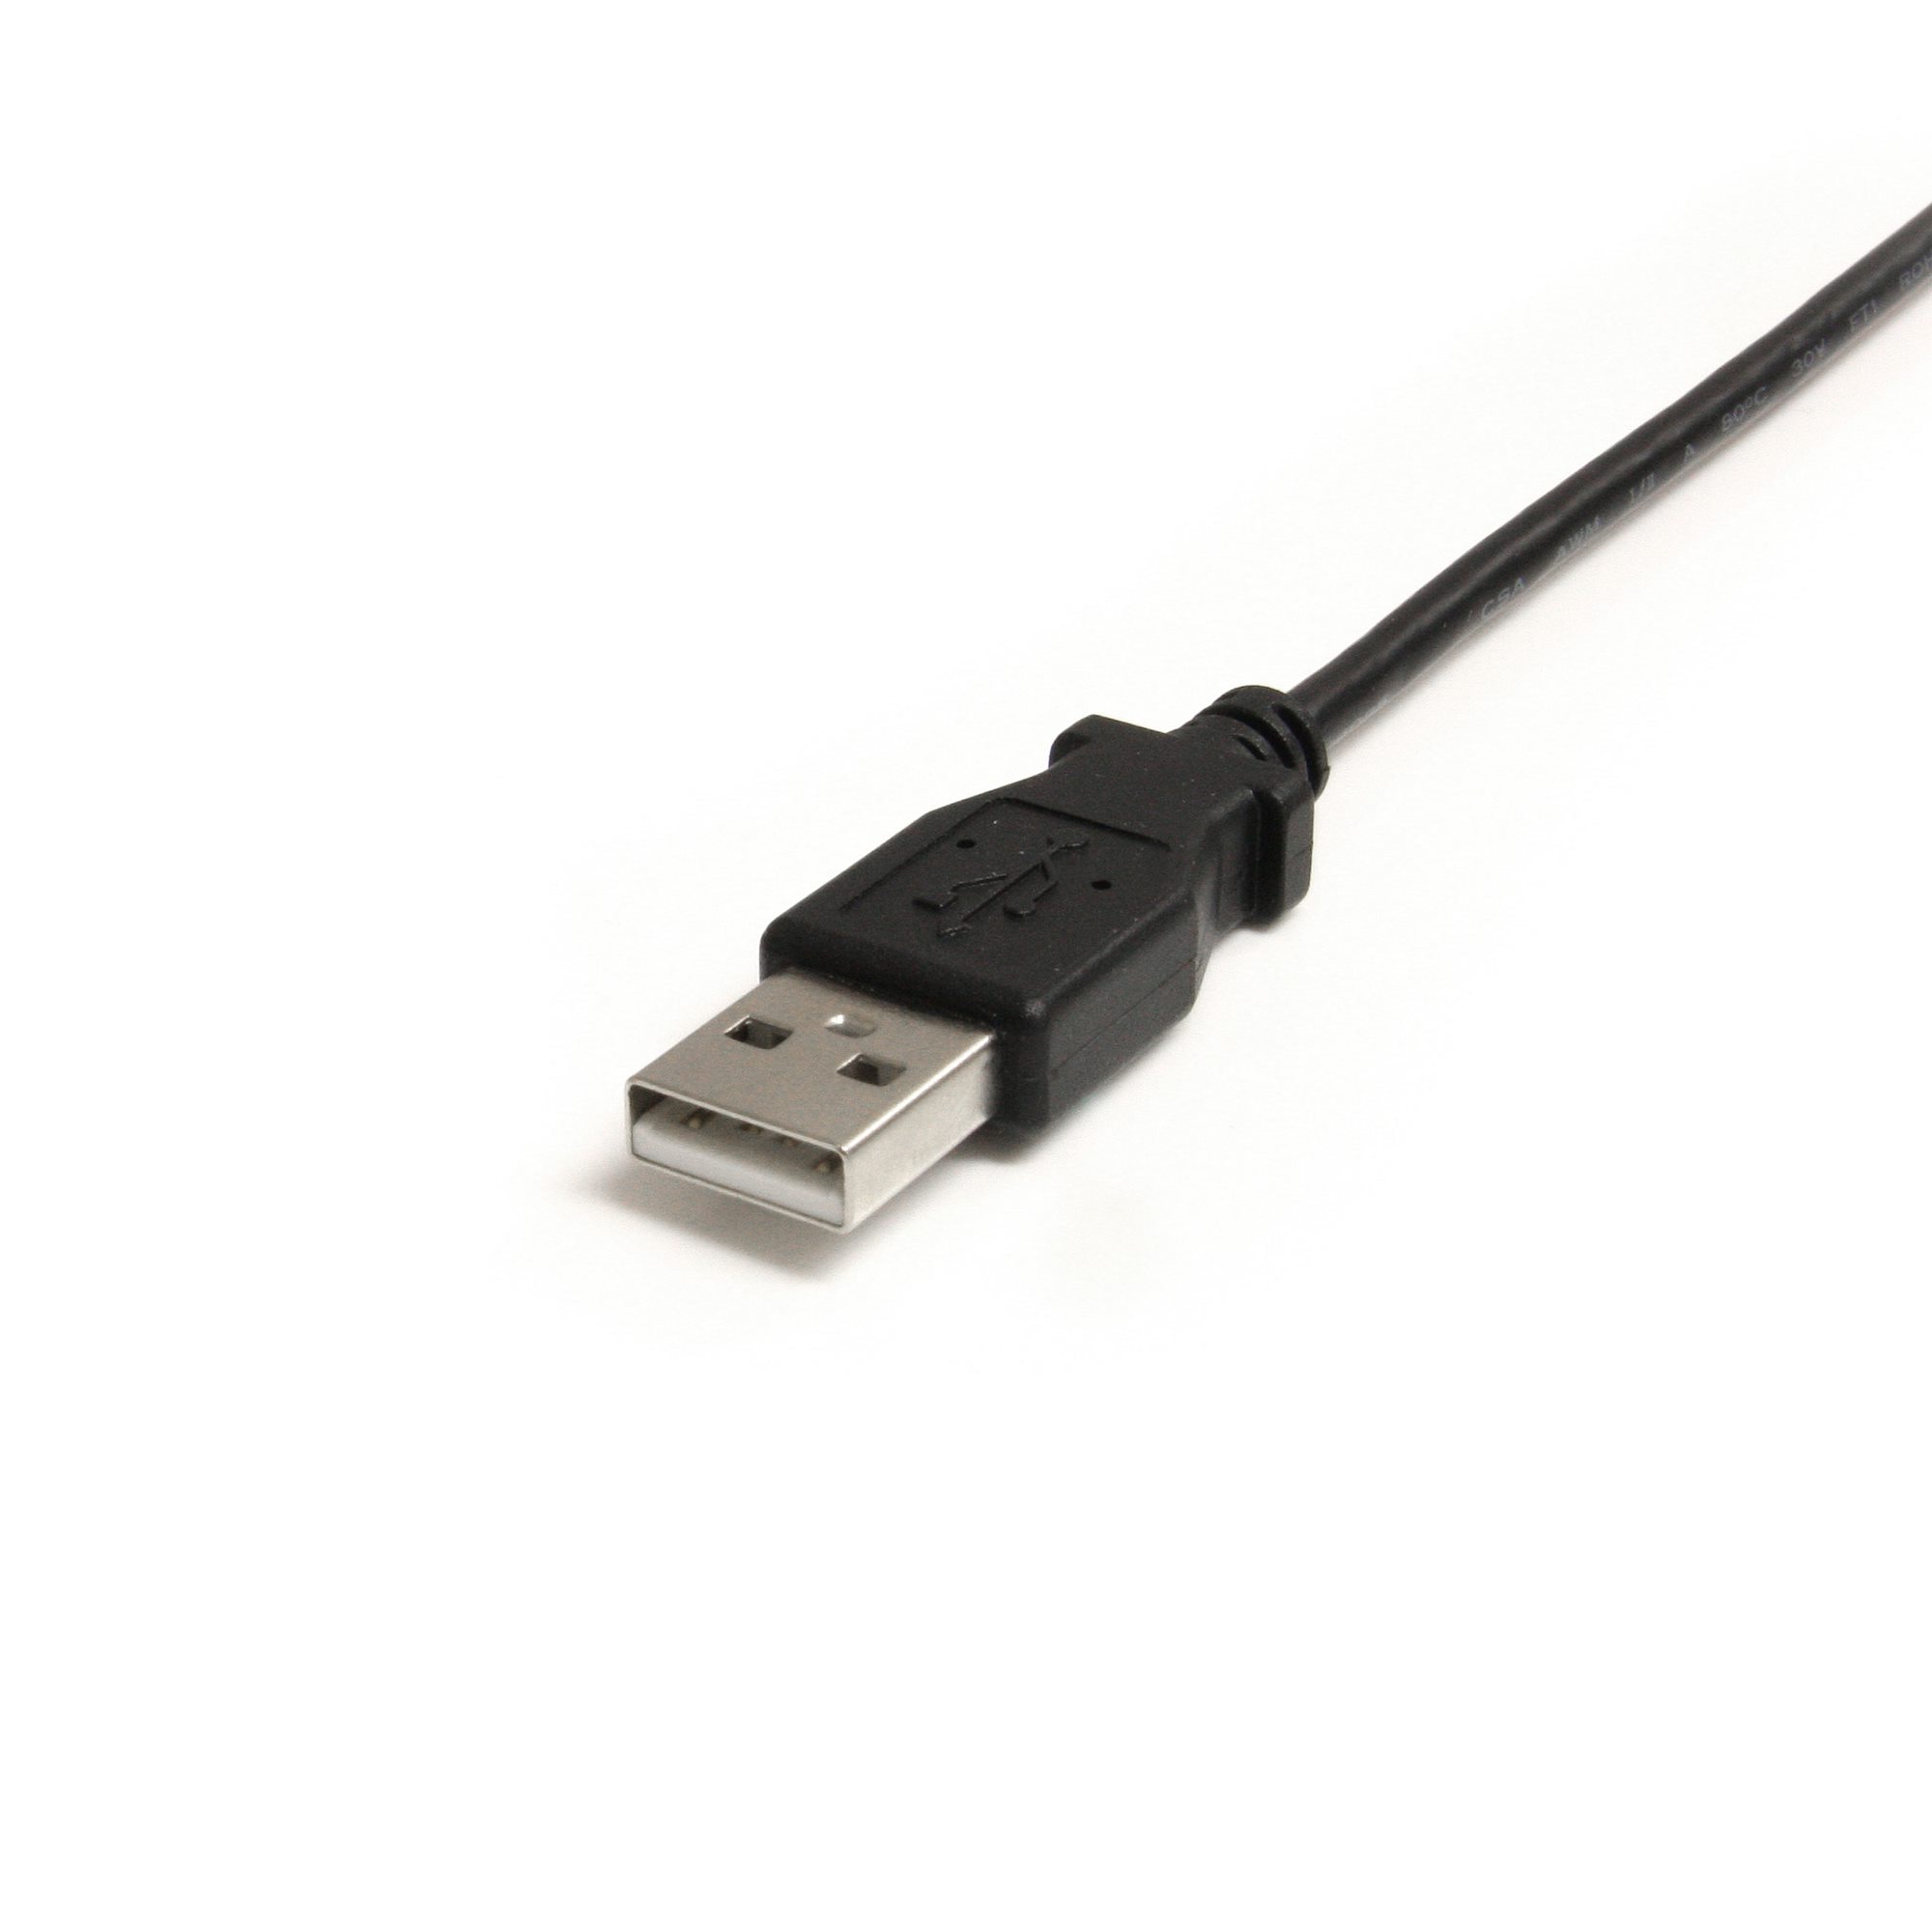 Right Angle Micro USB Cable - USB 2.0 A-Male to Micro B - Sixfab